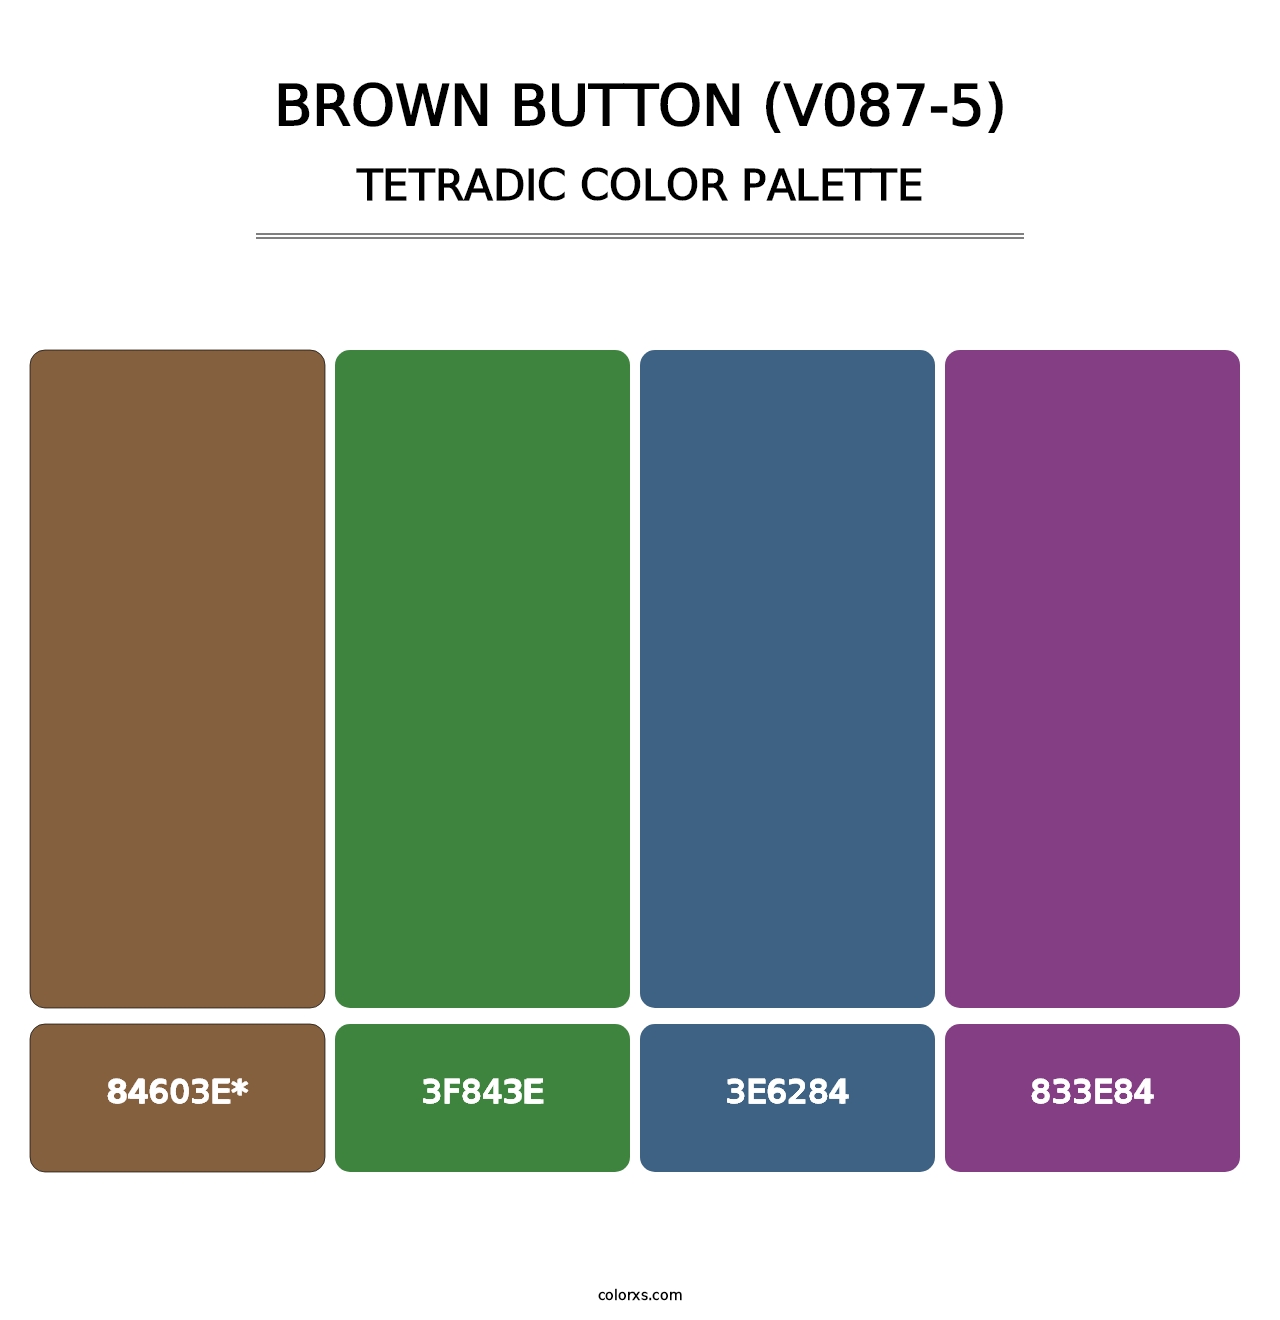 Brown Button (V087-5) - Tetradic Color Palette